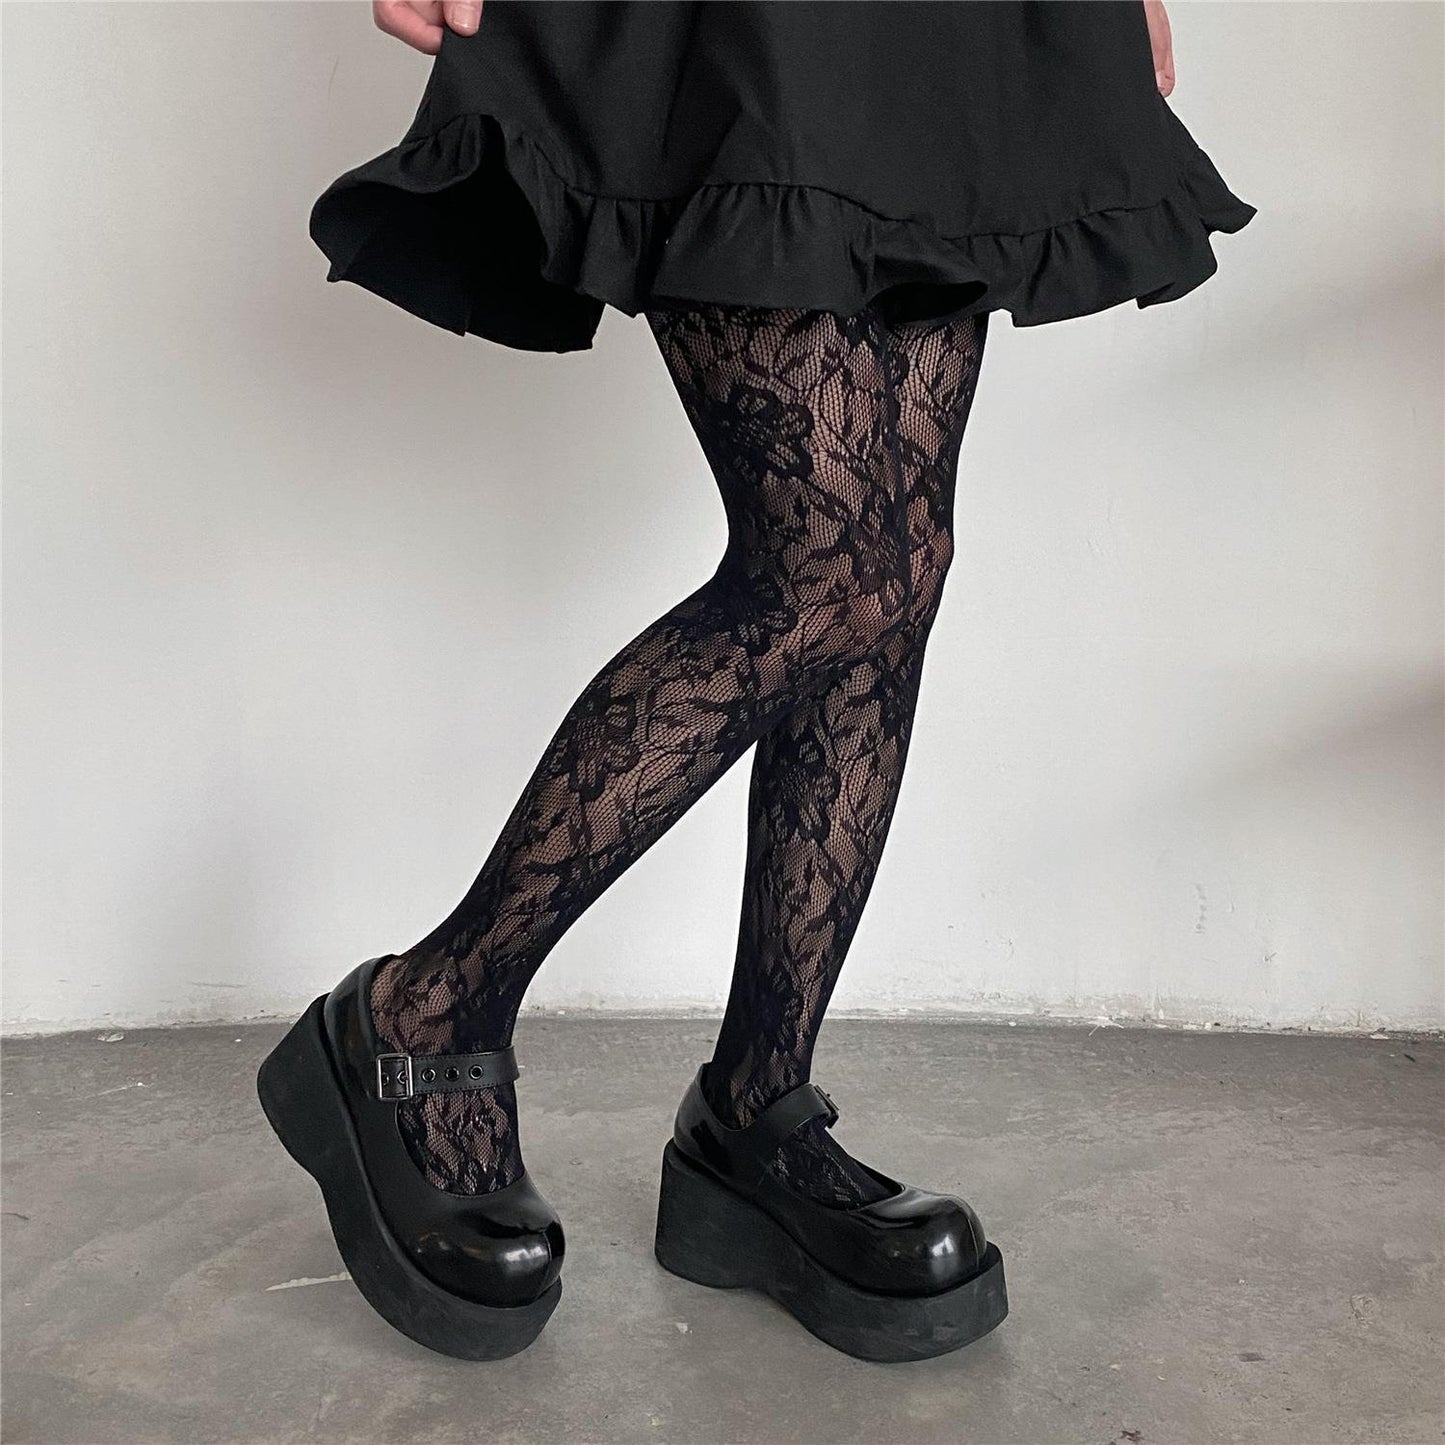 Femboy in Black Floral Lace Pantyhose - Femboy Fashion